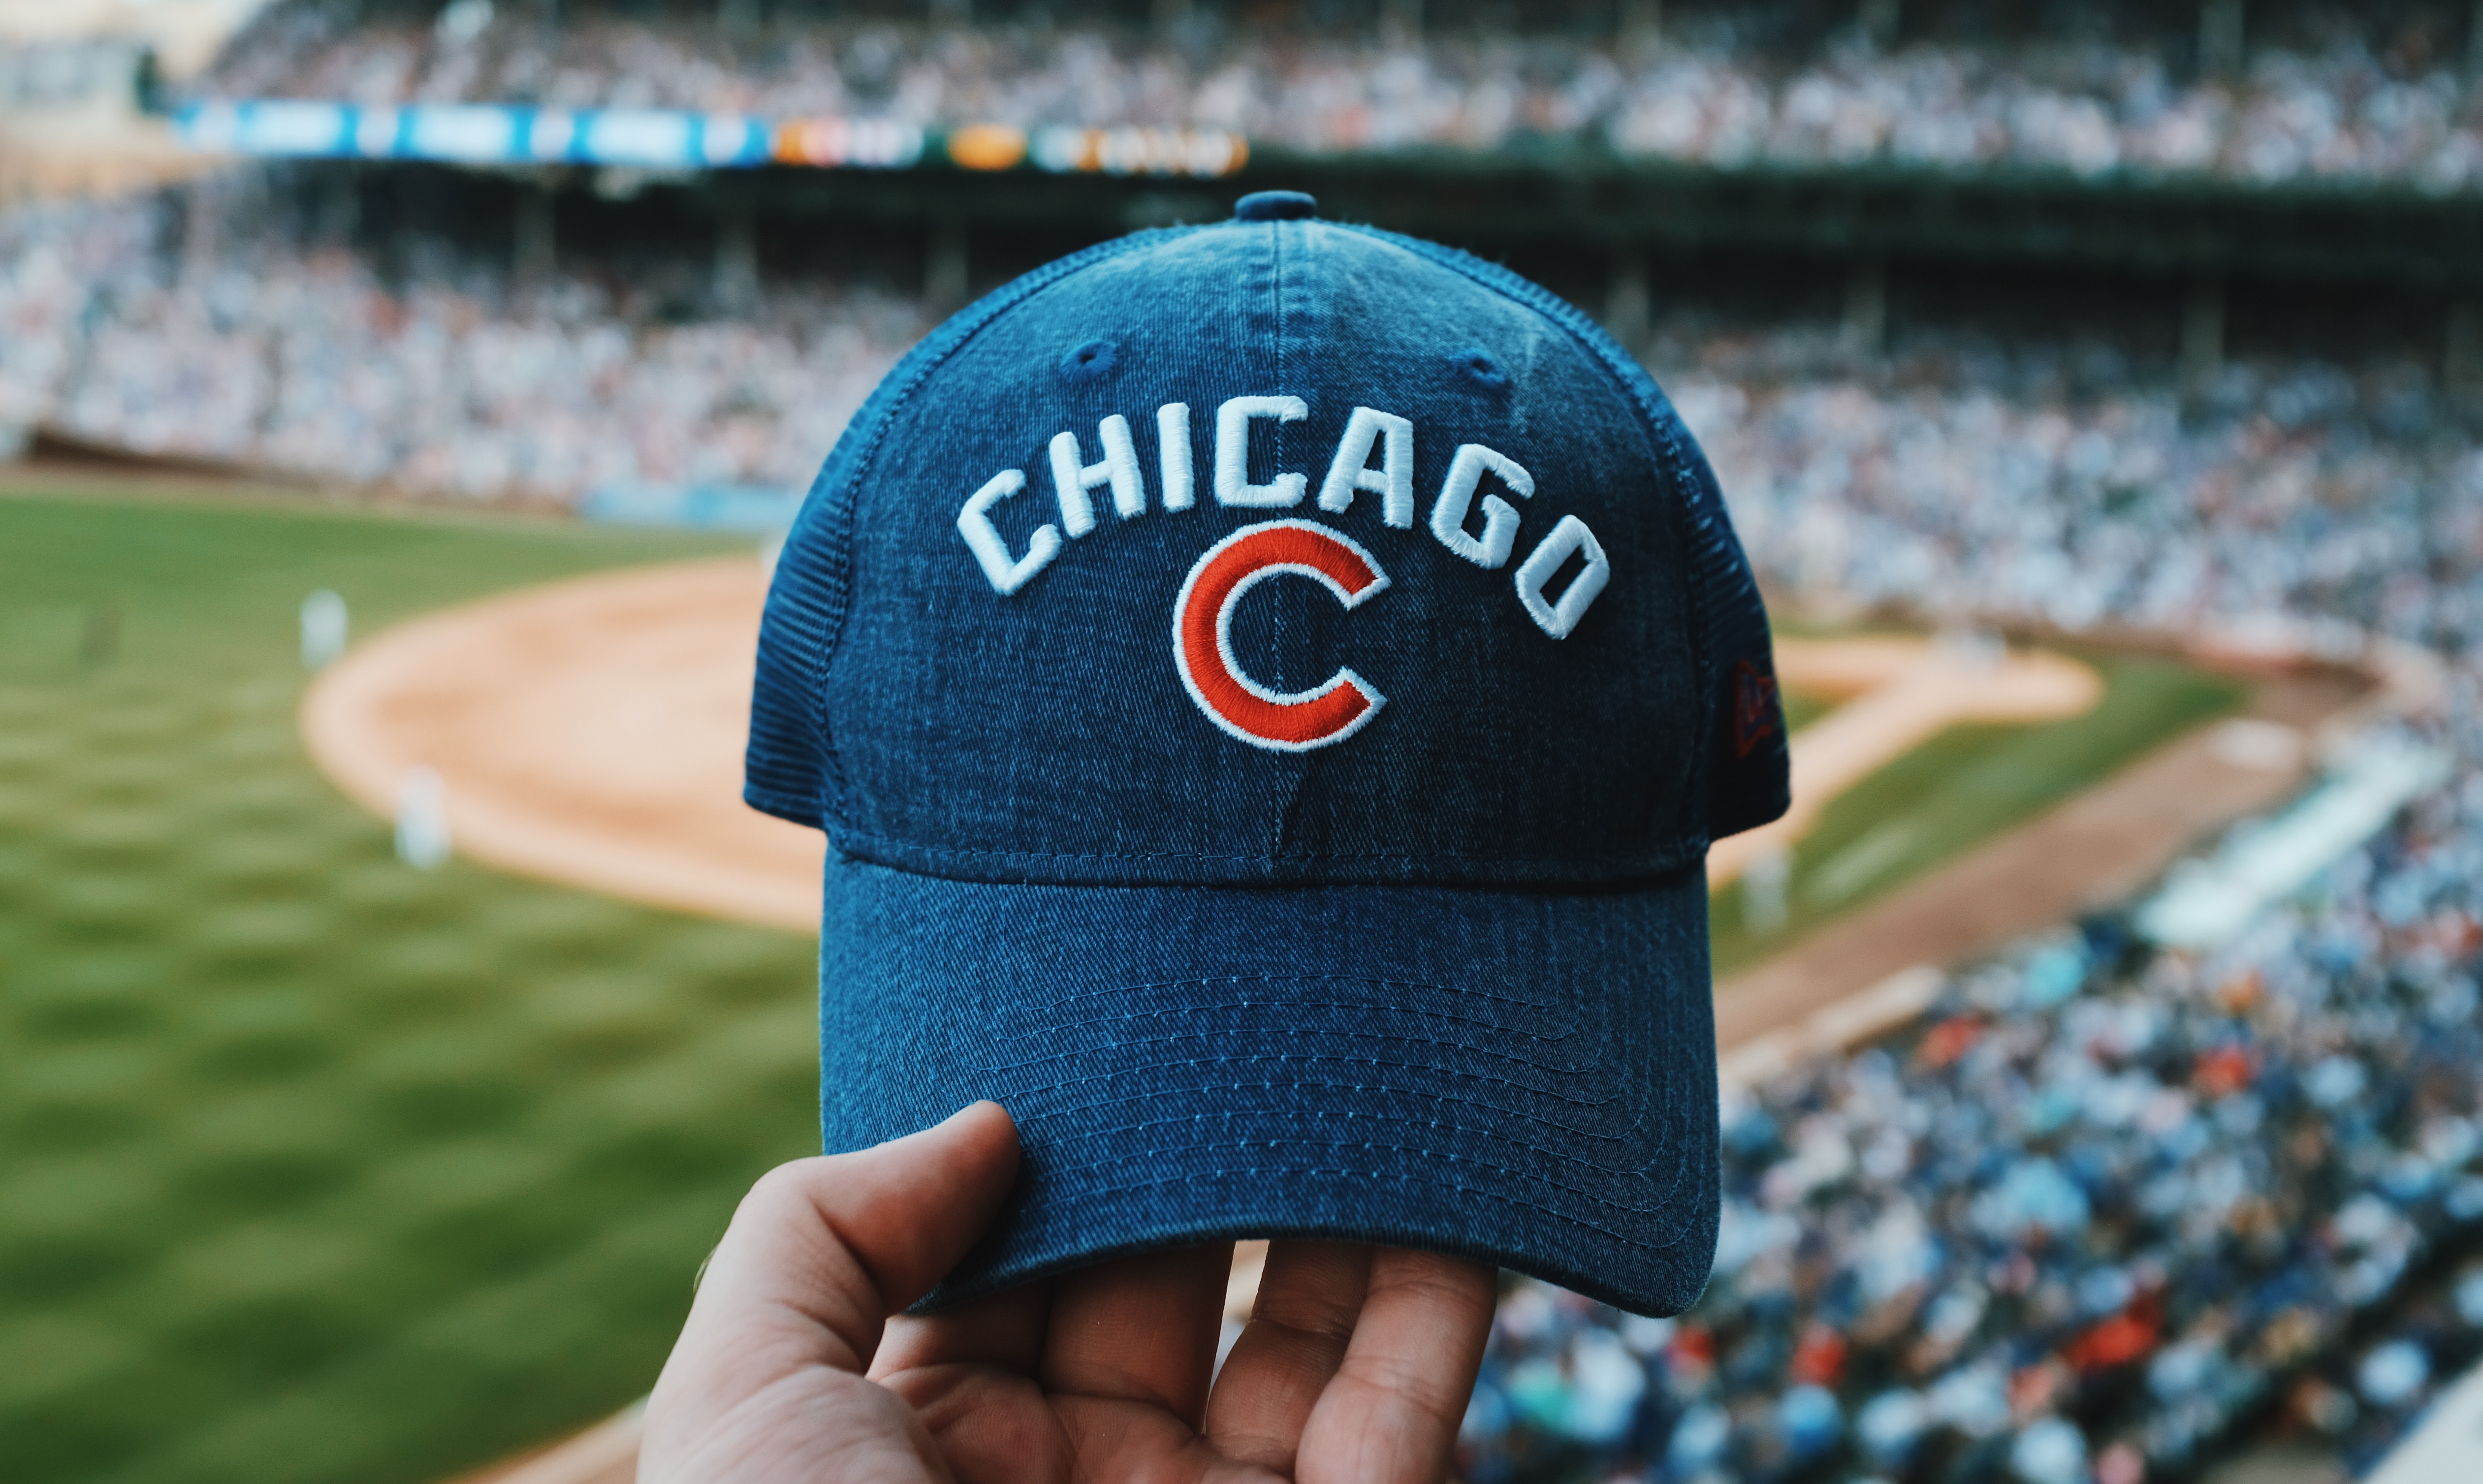 Chicago Cubs baseball hat